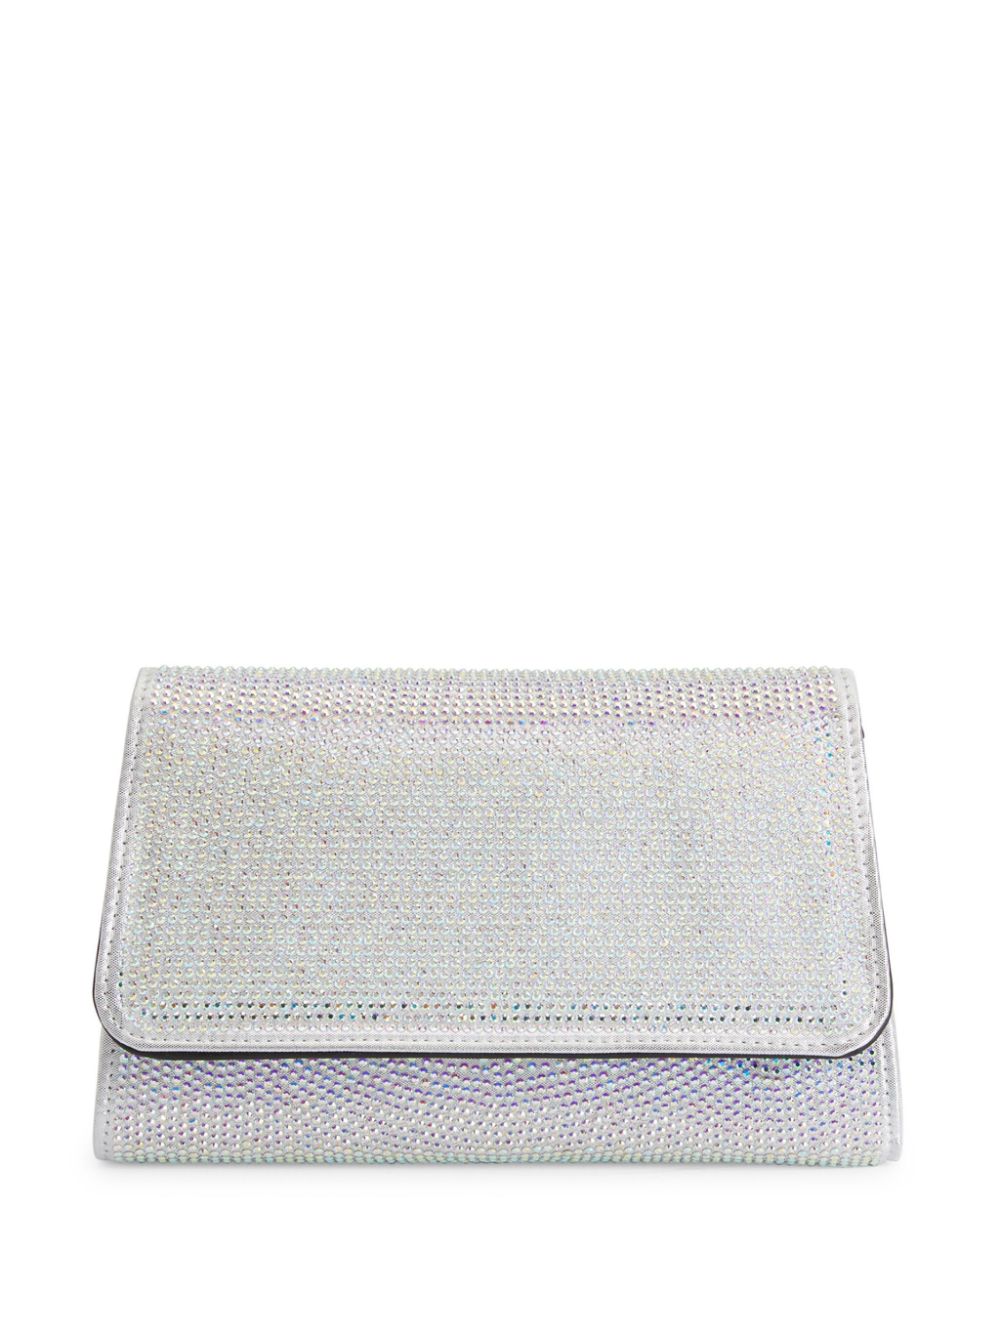 Image 1 of Giuseppe Zanotti Idha crystal-embellished clutch bag